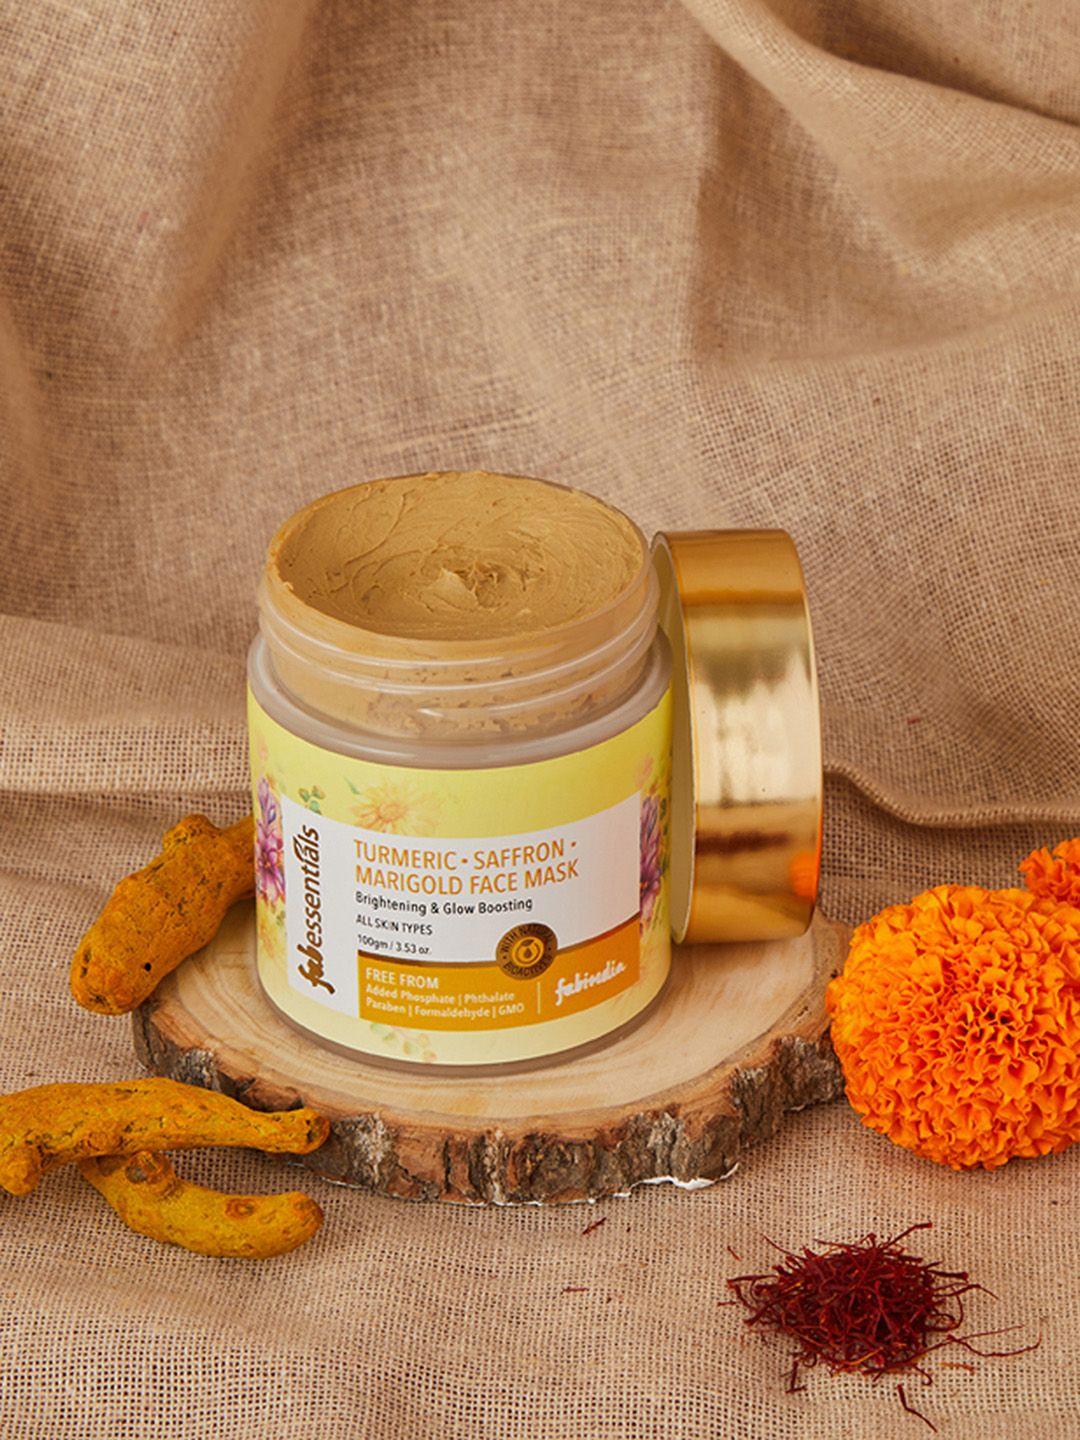 fabindia turmeric saffron marigold face mask - 100 g